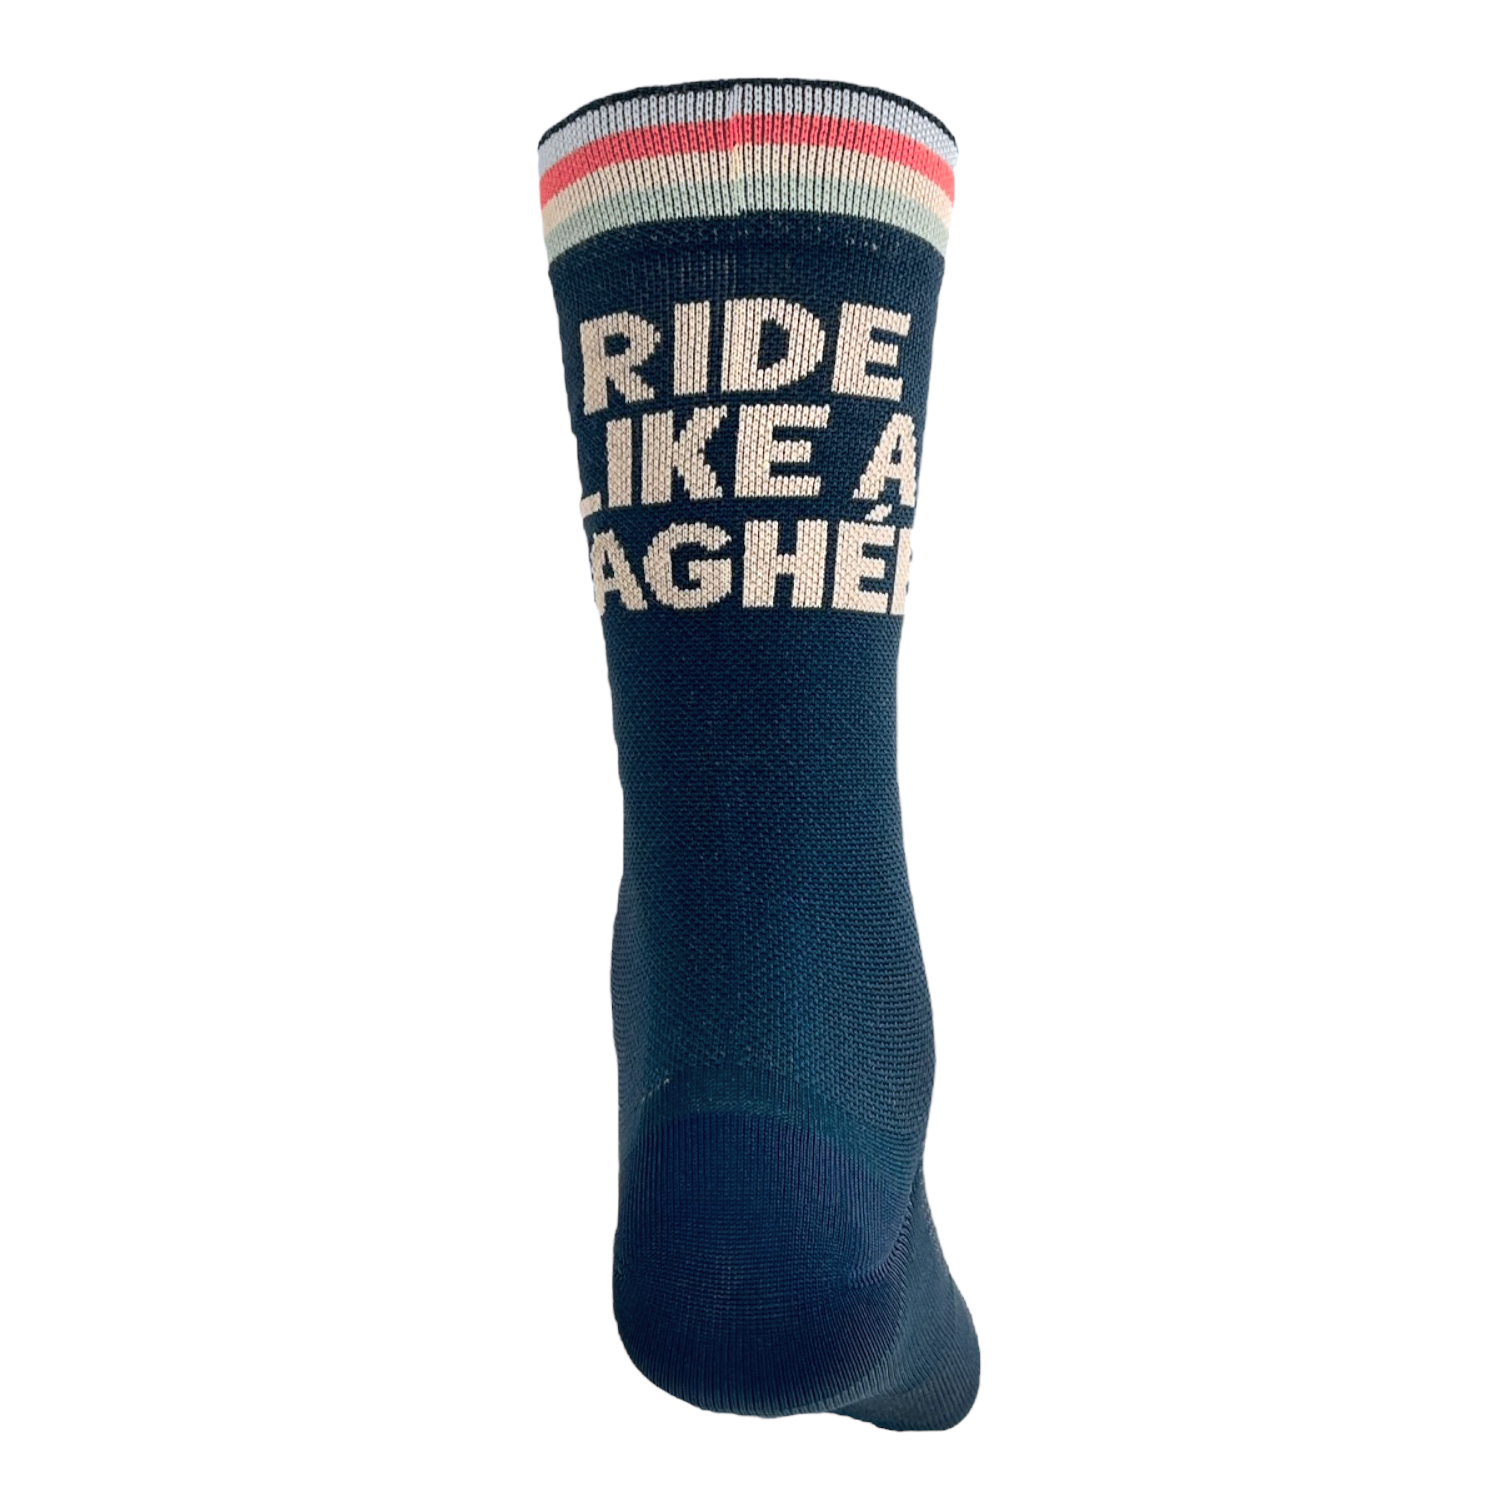 "Ride like a laghée" Ciclistica Socks - Petrol Blue